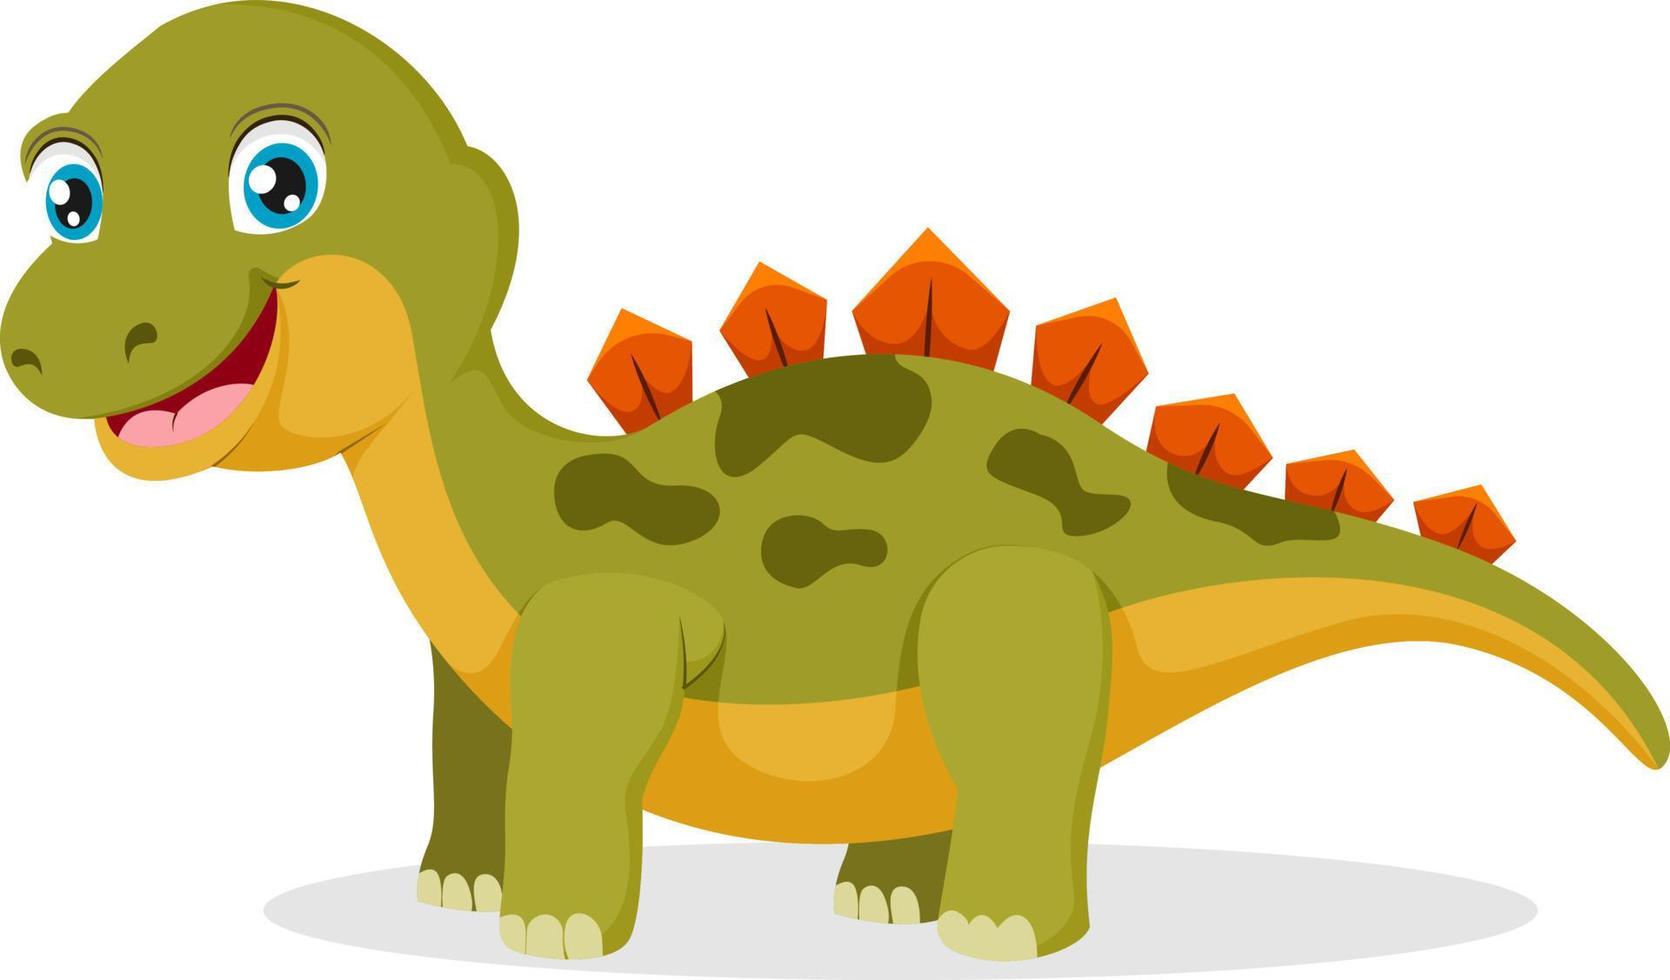 Cute stegosaurus cartoon on white background vector